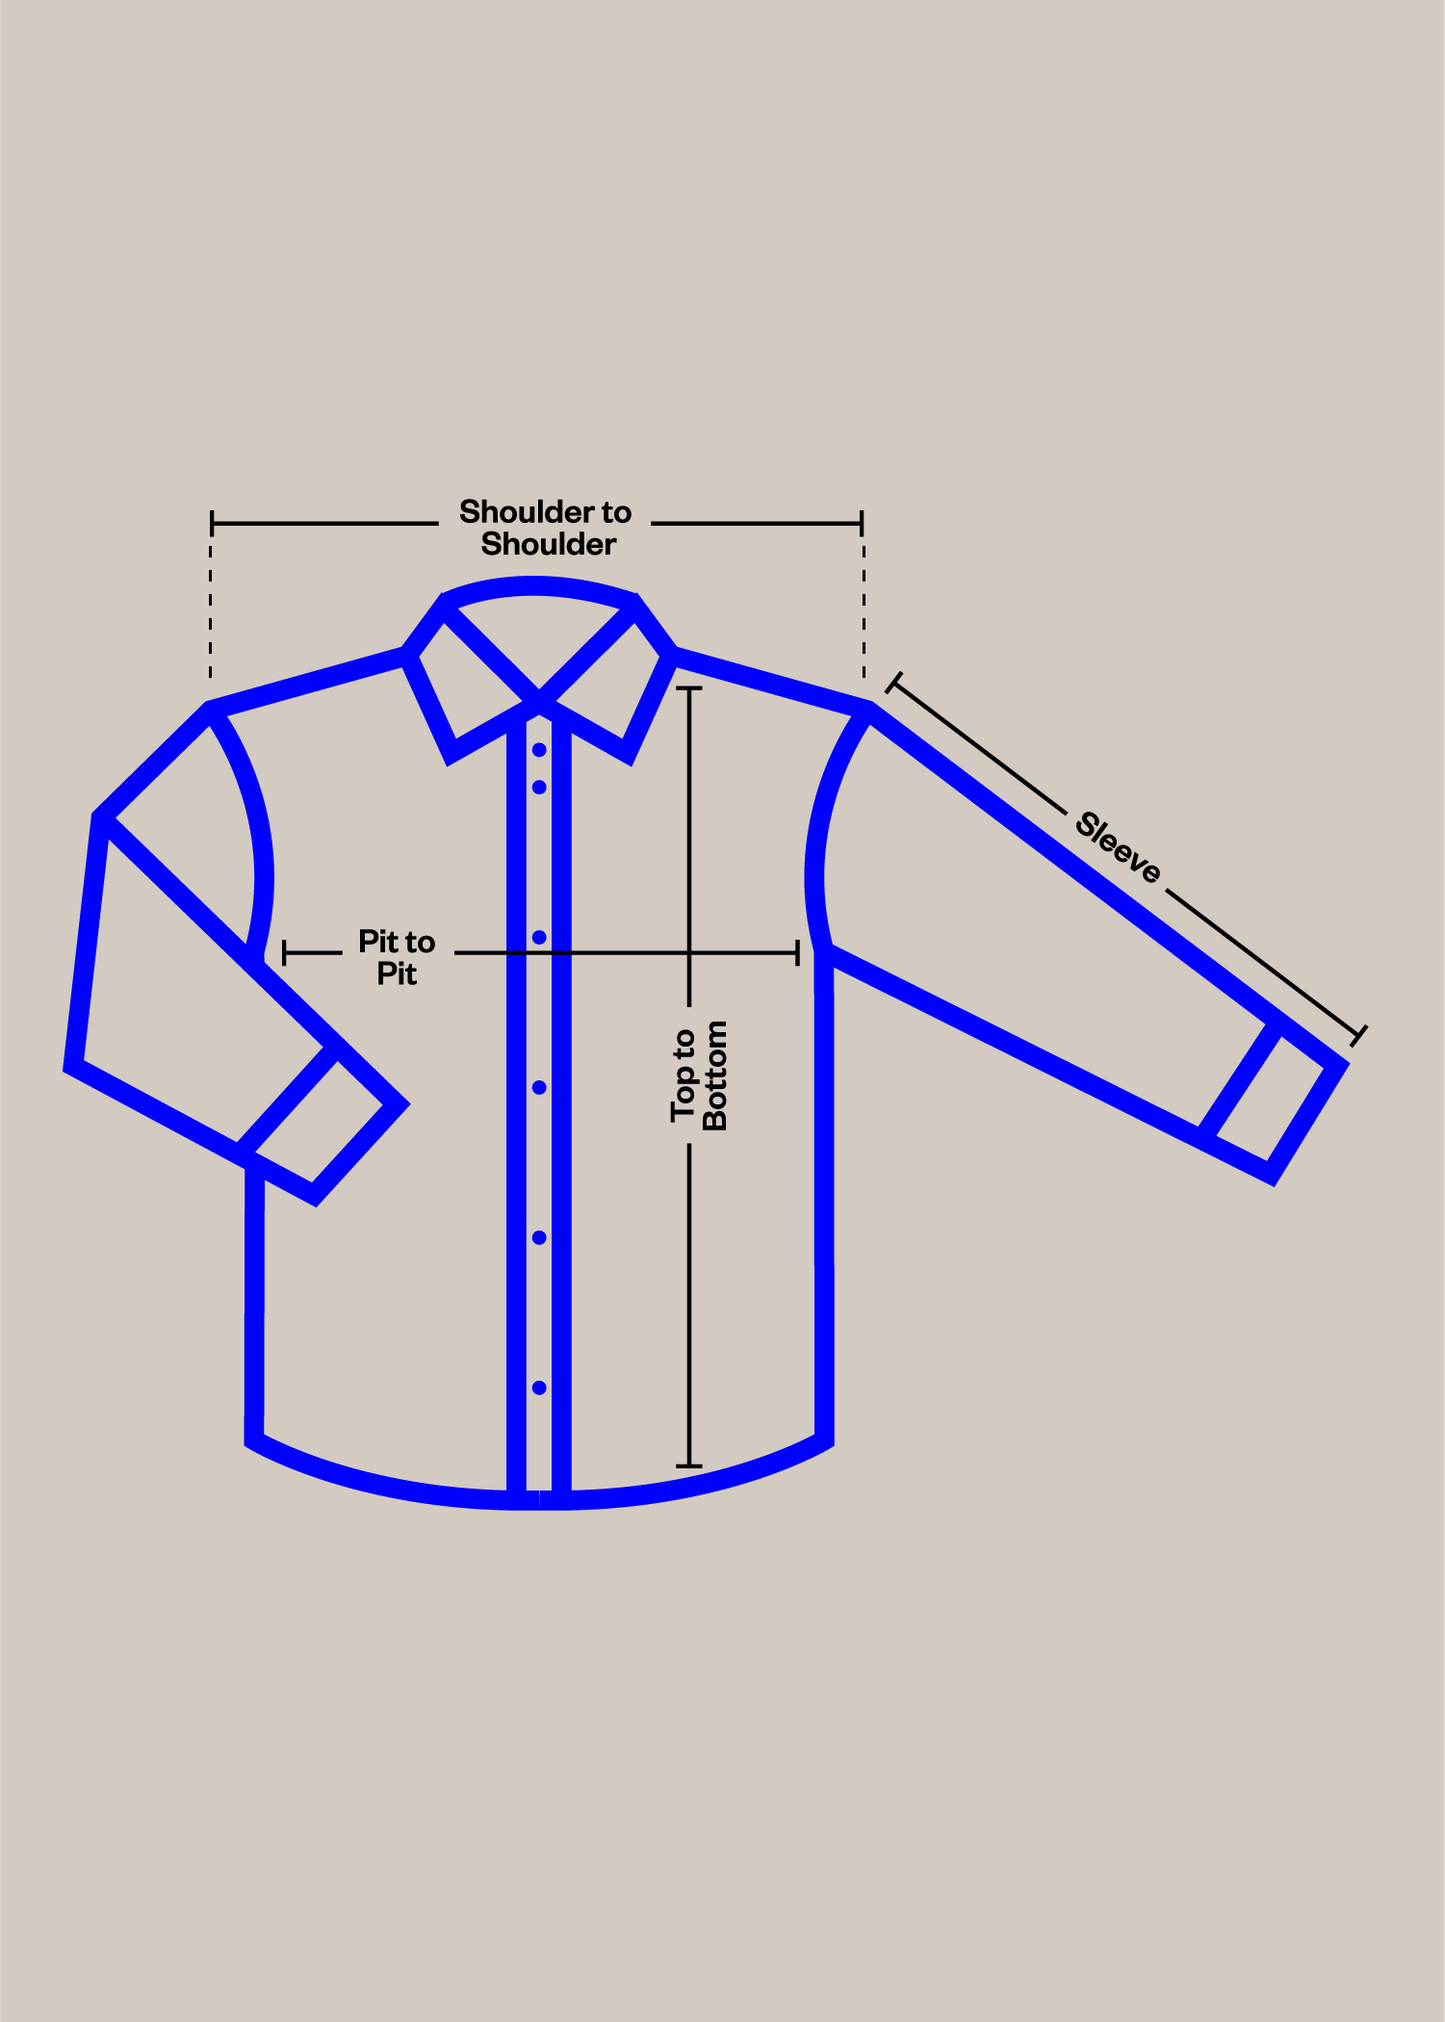 1980s Bleu de Travail European Workwear Chore Jacket Size M/L